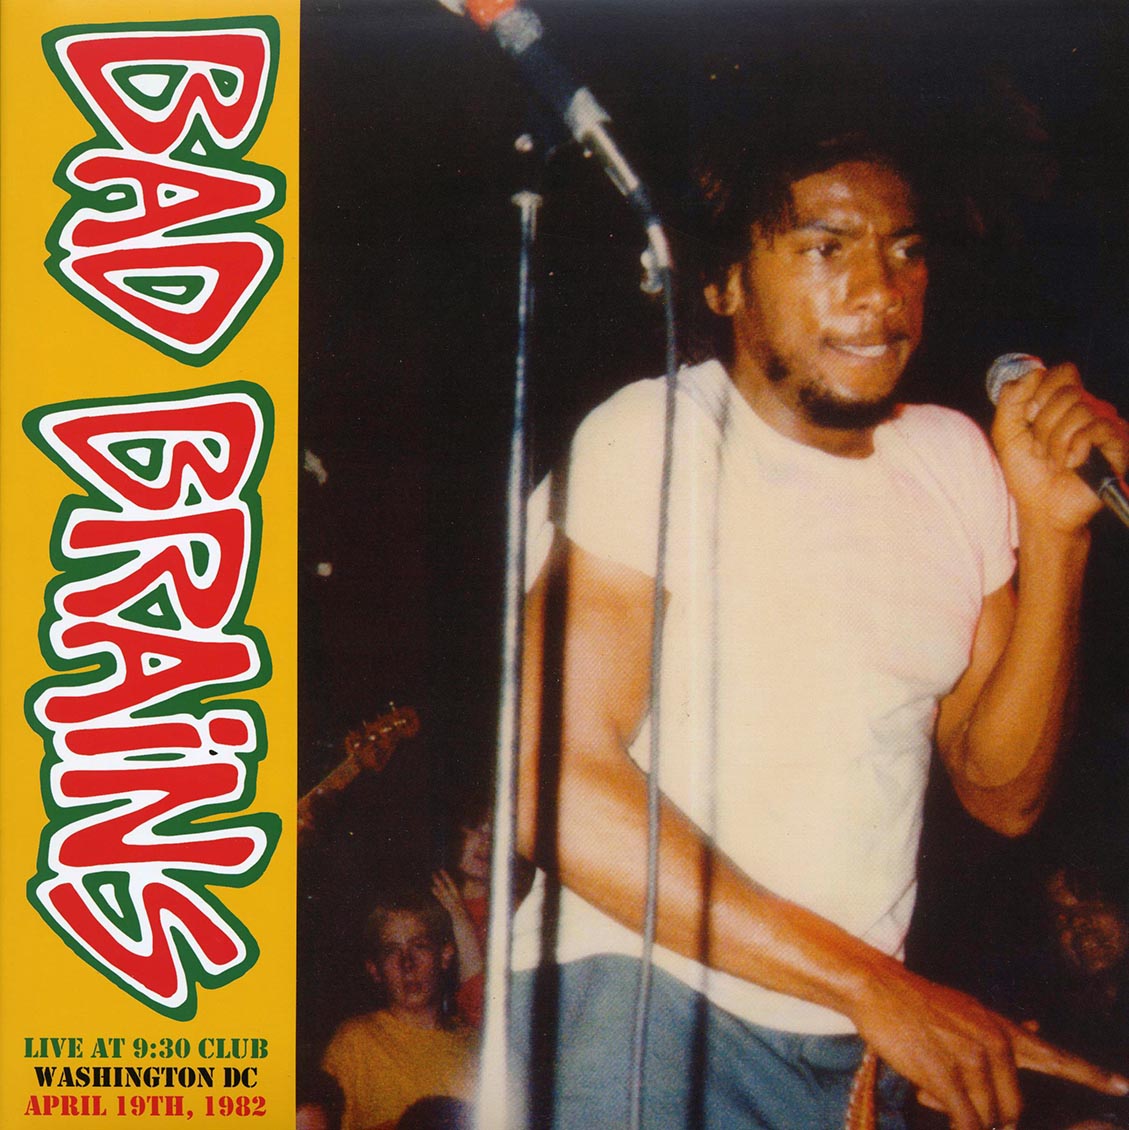 Bad Brains - Live At 9:30 Club, Washington DC, April 19th, 1982 - Vinyl LP